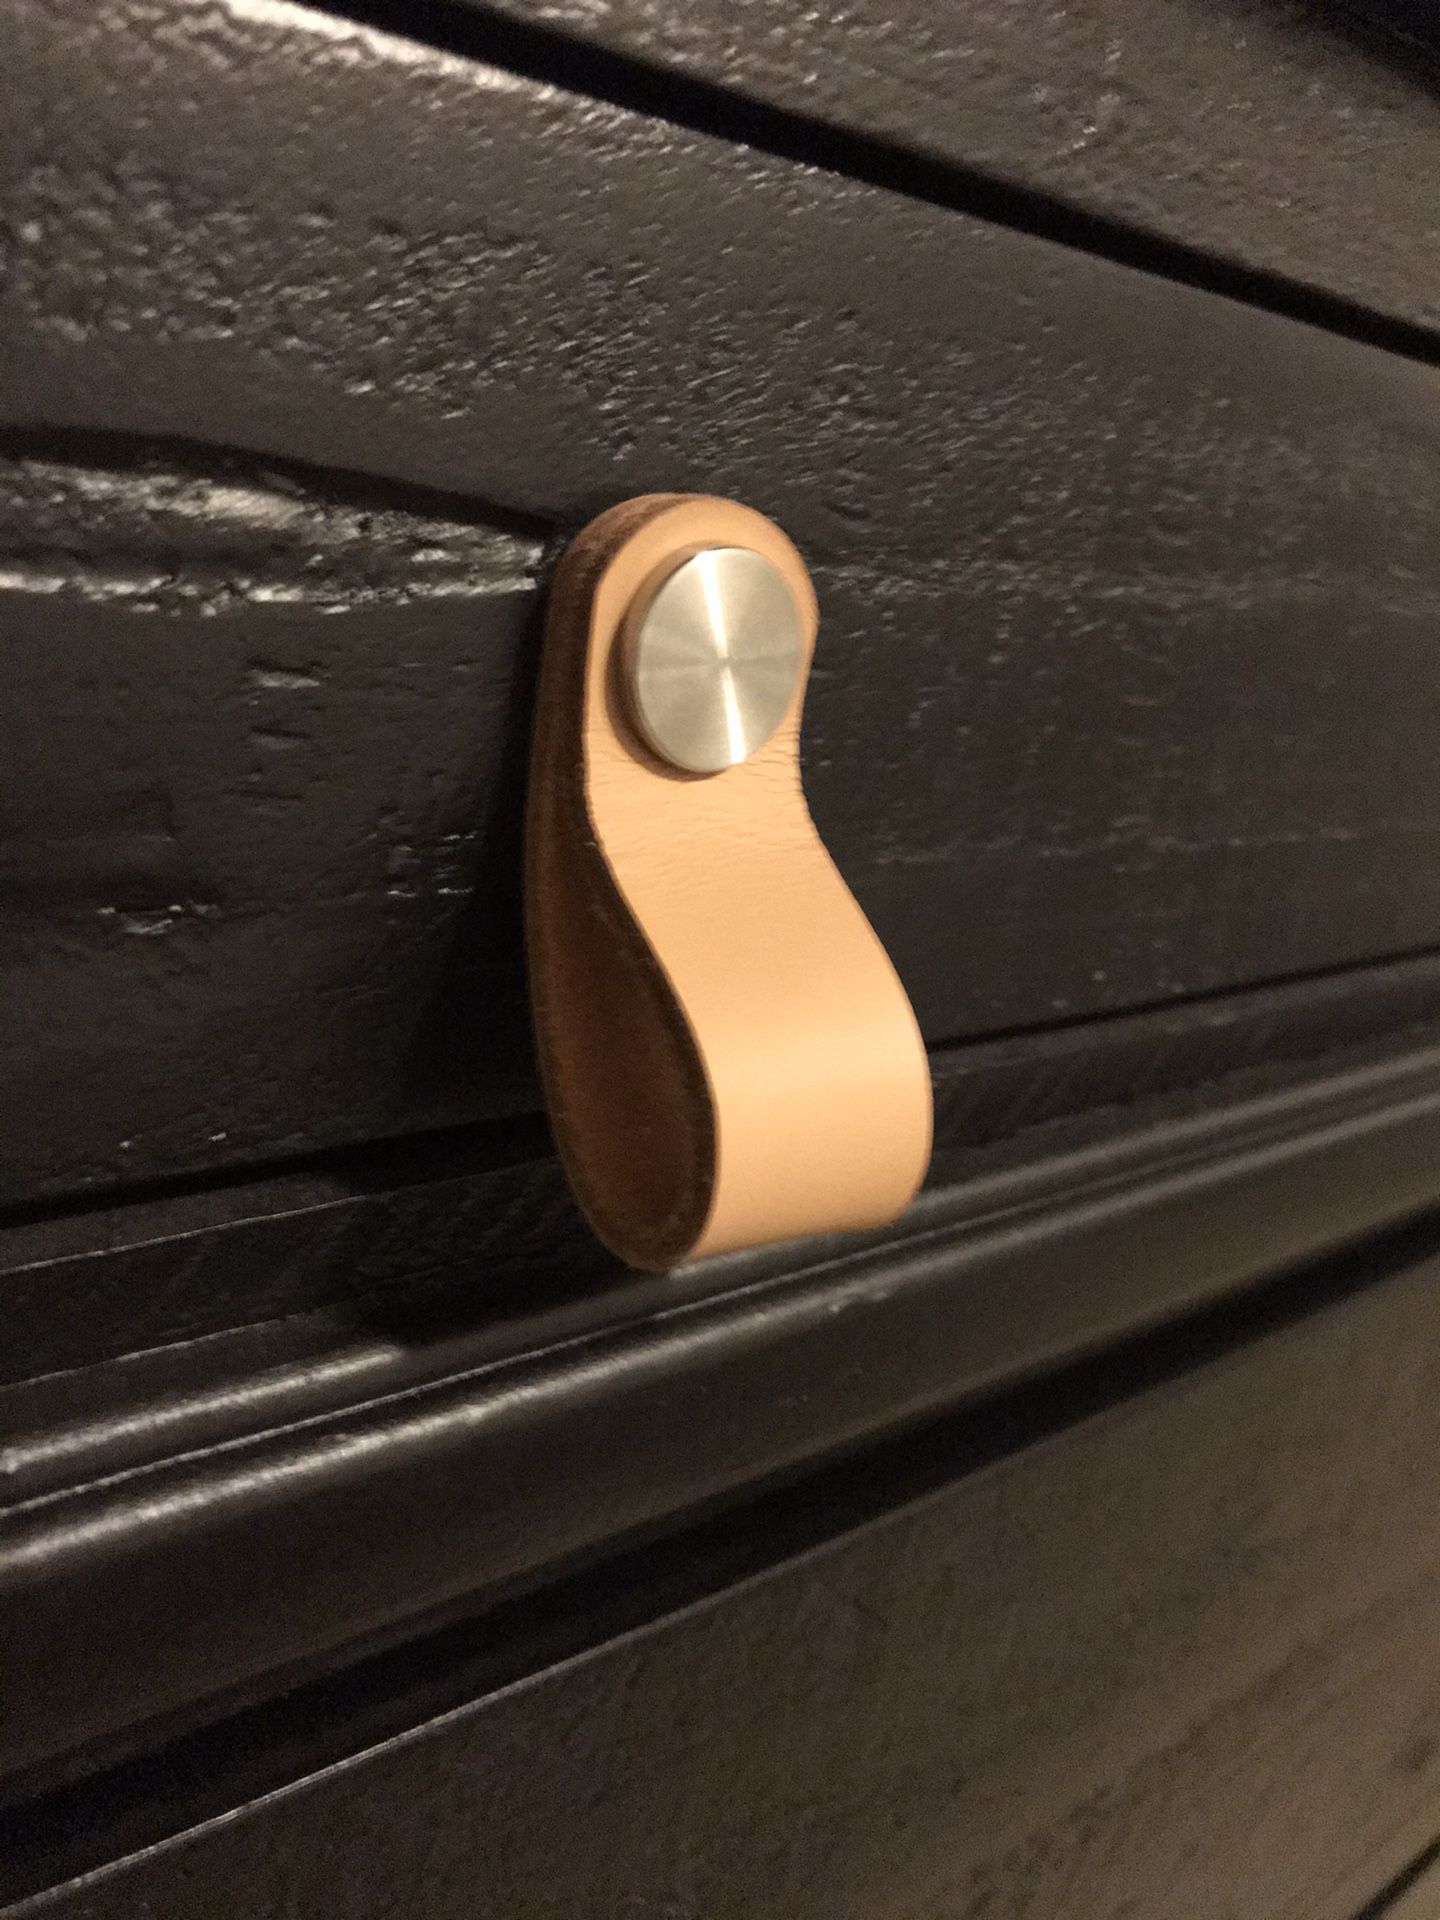 Leather strap dresser knob handle pulls